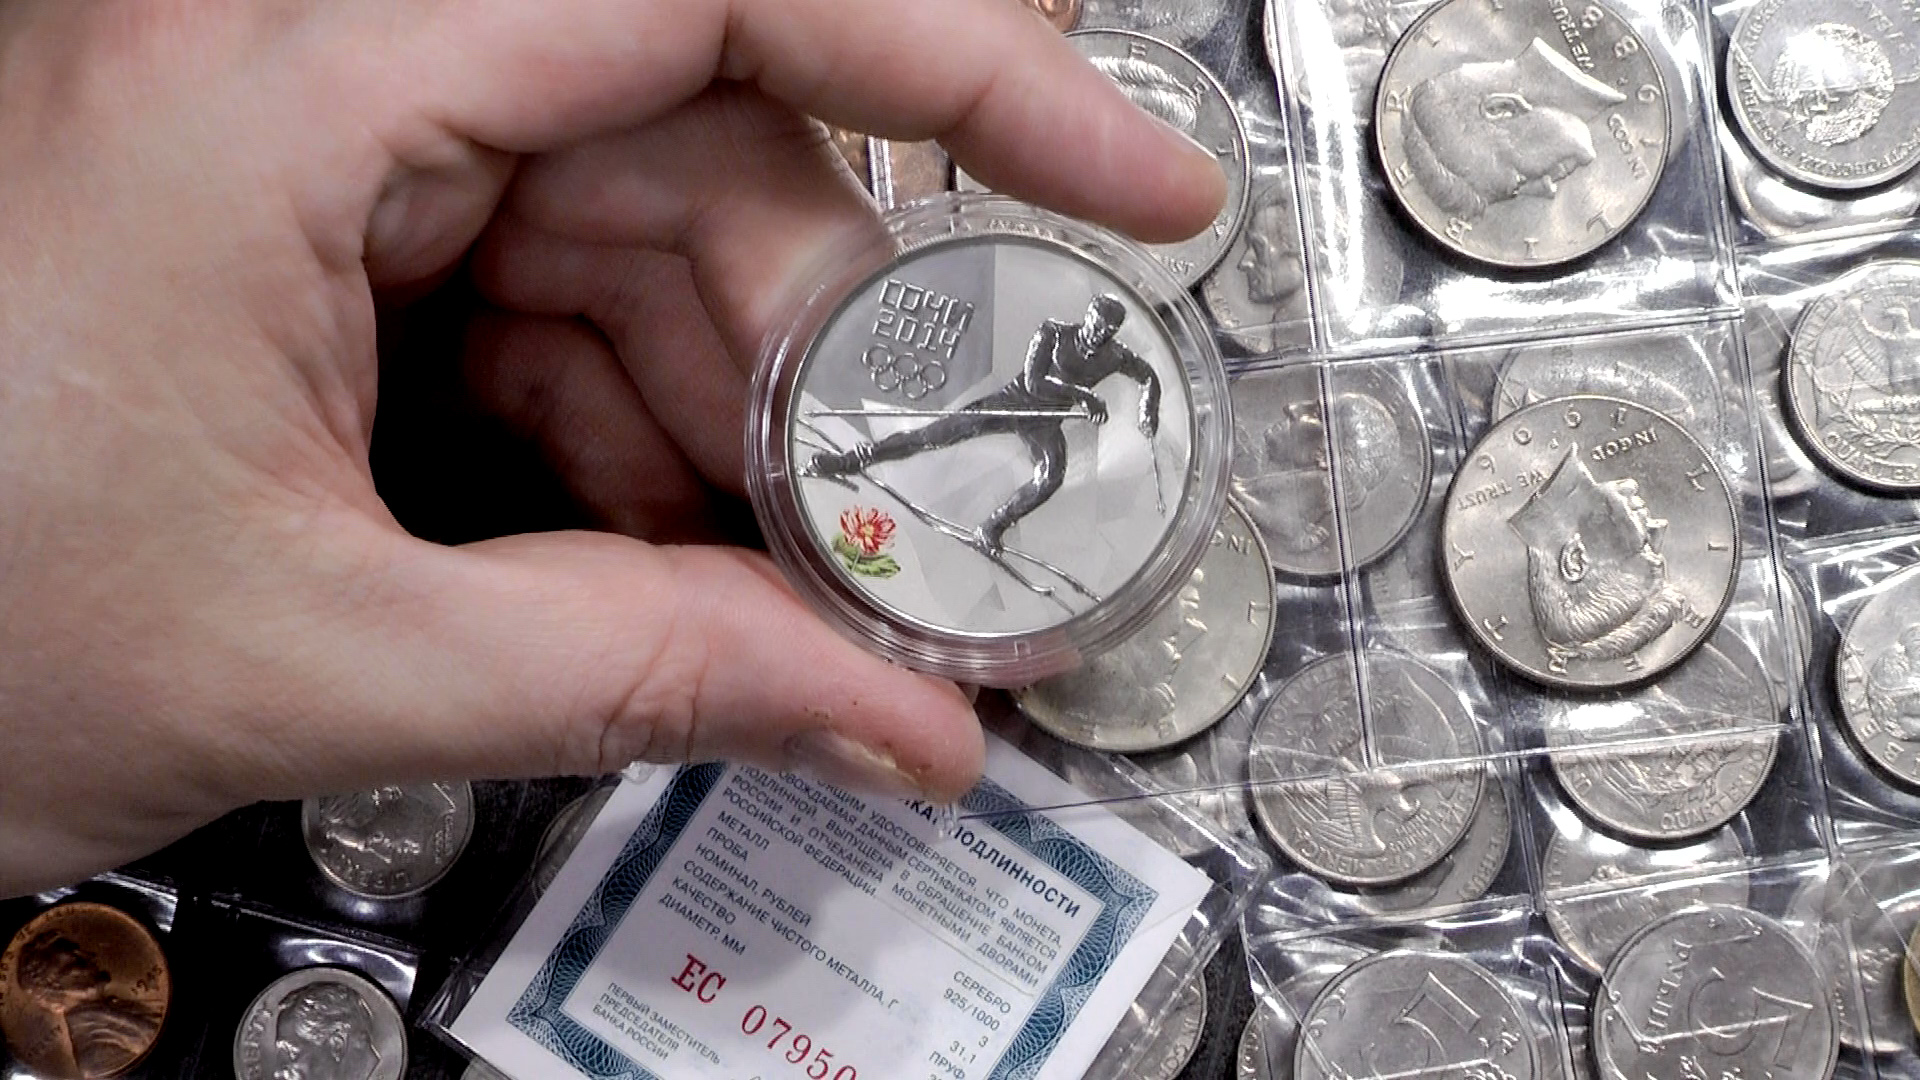 Серебро Сочи 2014, регулярка США. Распаковка посылки с монетами.